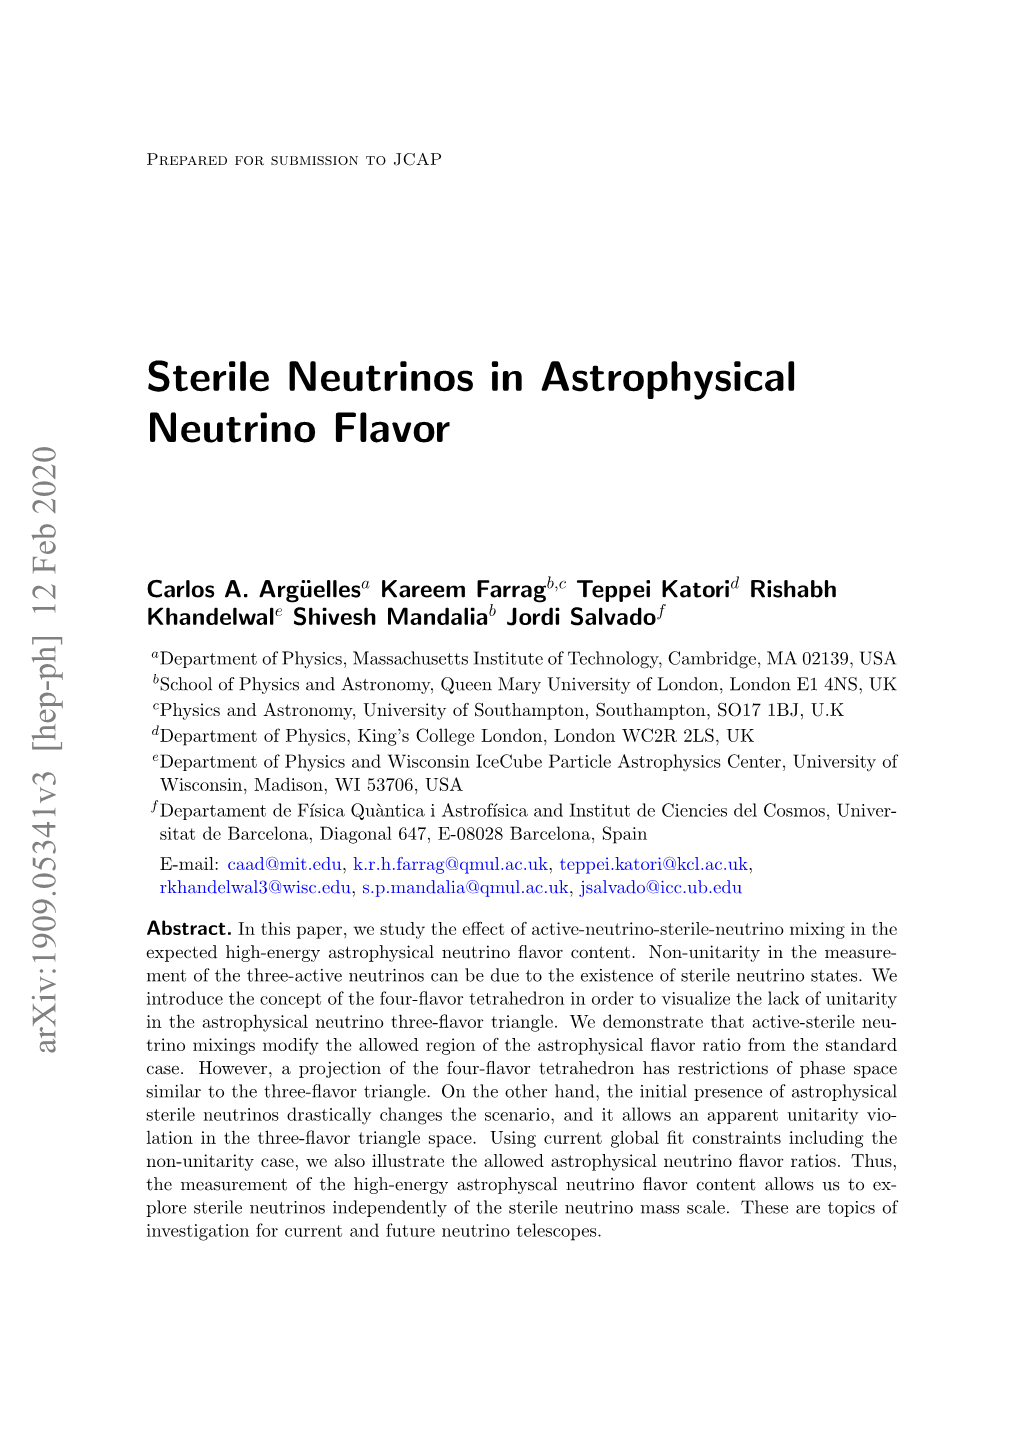 Sterile Neutrinos in Astrophysical Neutrino Flavor